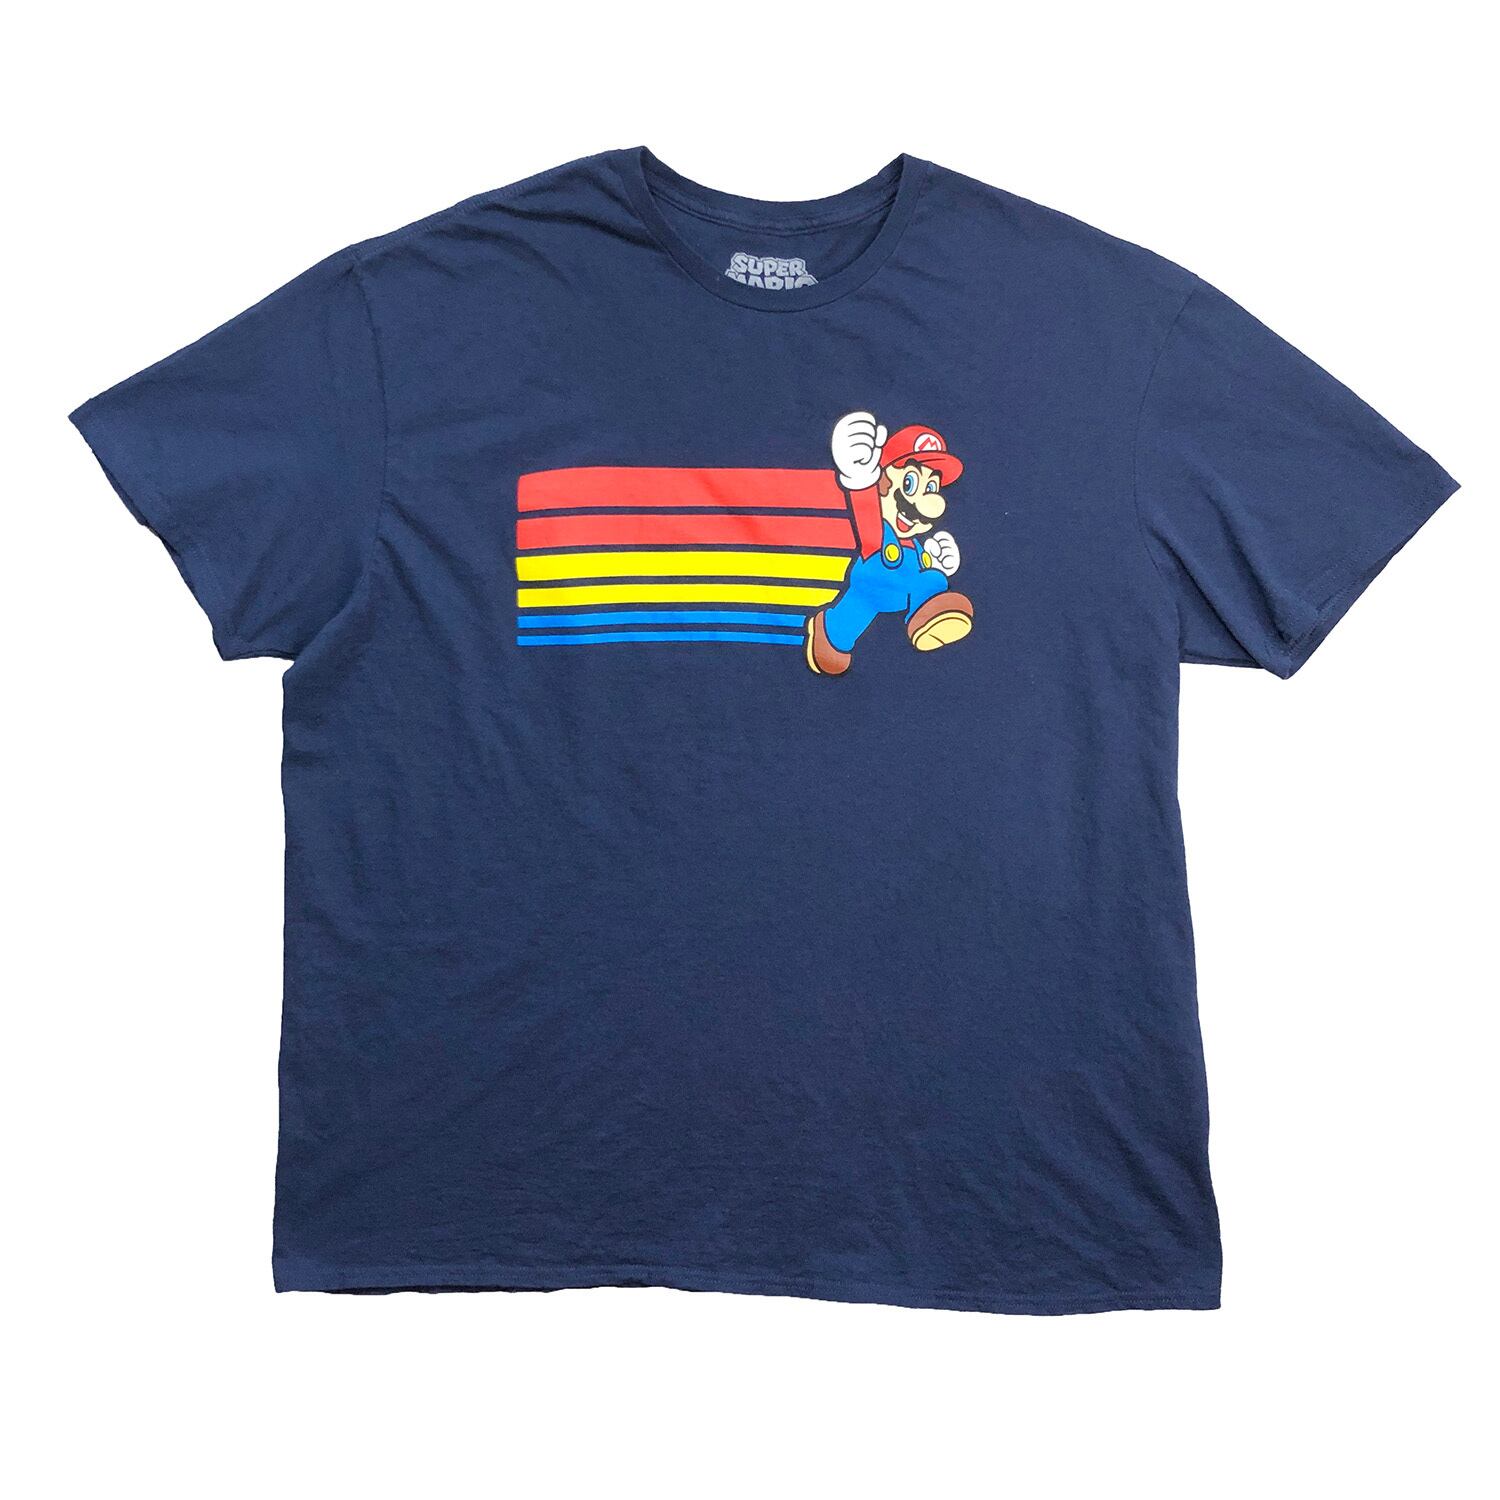 USA版 任天堂 スーパーマリオ キャラクター Tシャツ メンズXL ネイビー 大きいサイズ Nintendo ゲーム ユニバ 古着 |  古着屋エバレット powered by BASE